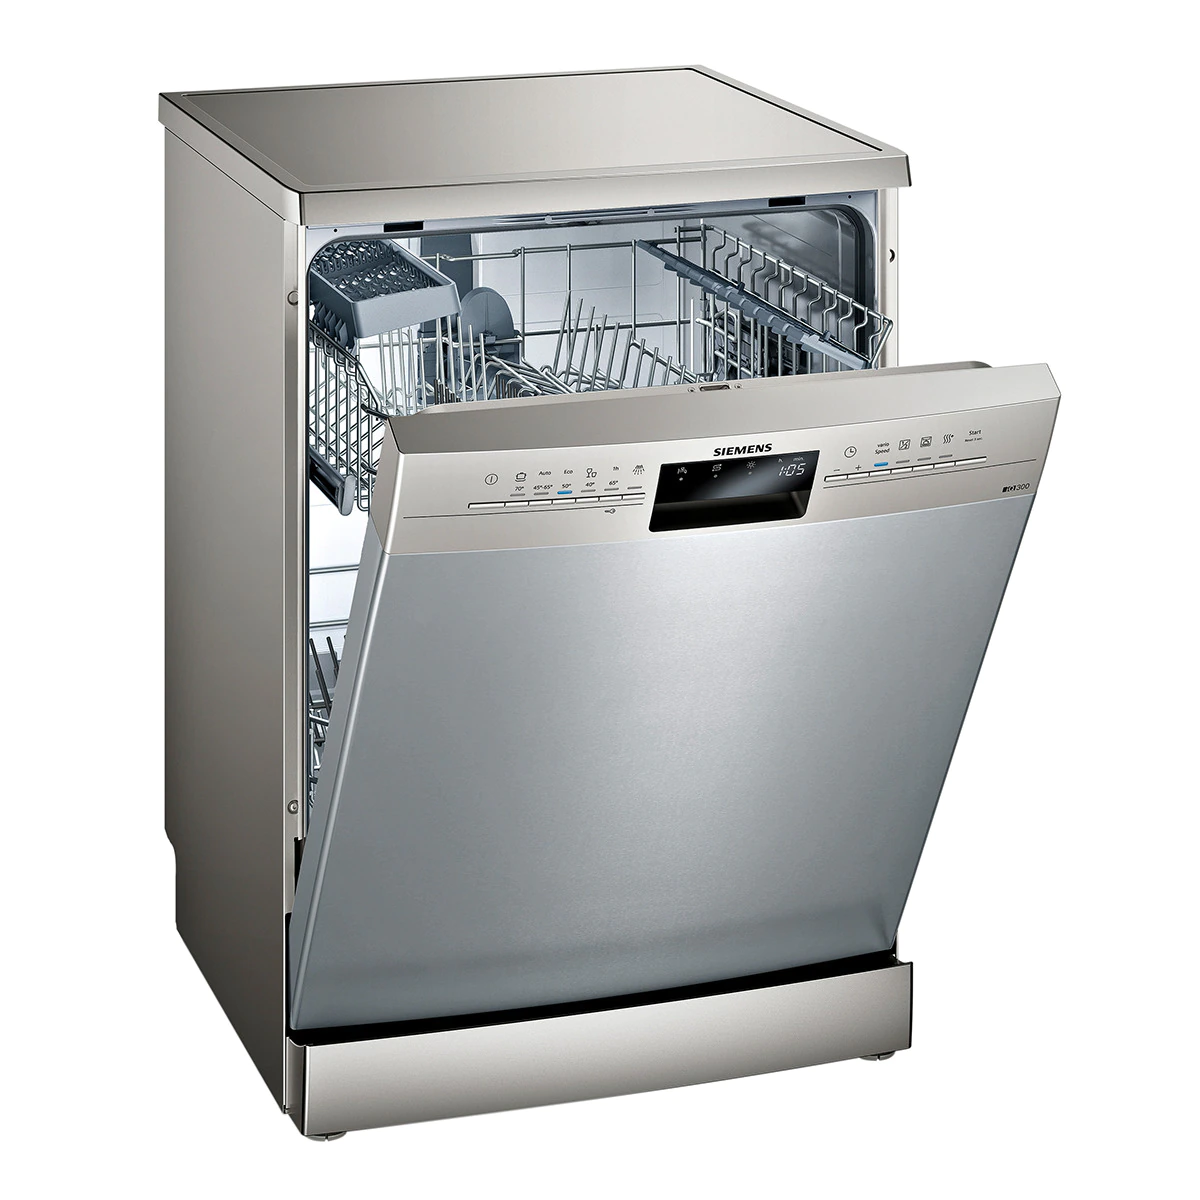 Lavavajillas Siemens SN236I02GE con 6 programas de lavado